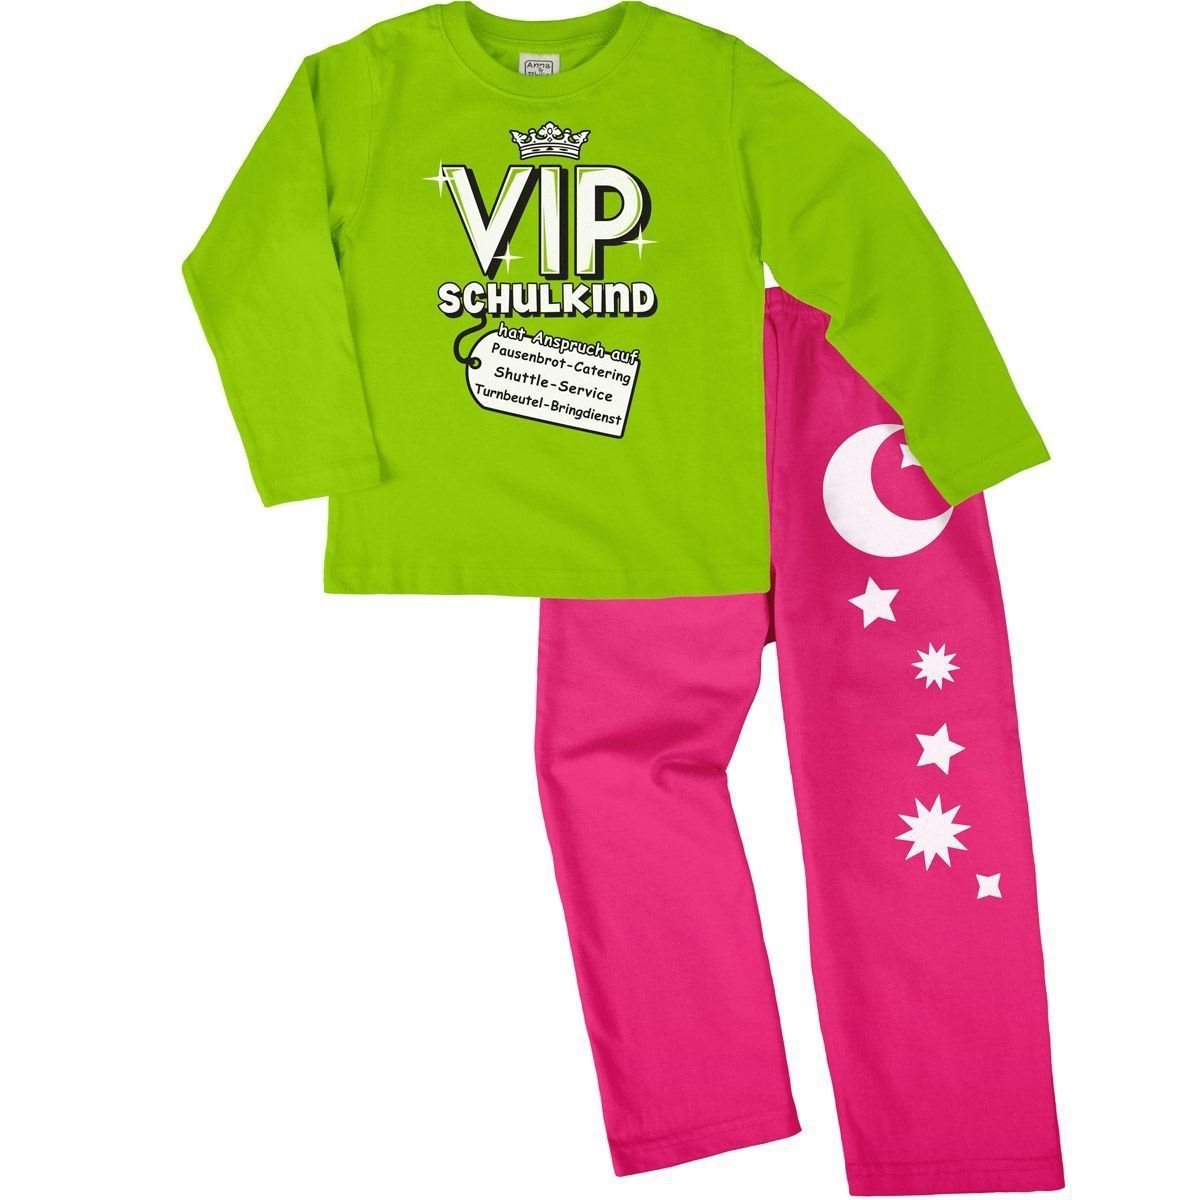 VIP Schulkind Pyjama Set hellgrün / pink 122 / 128